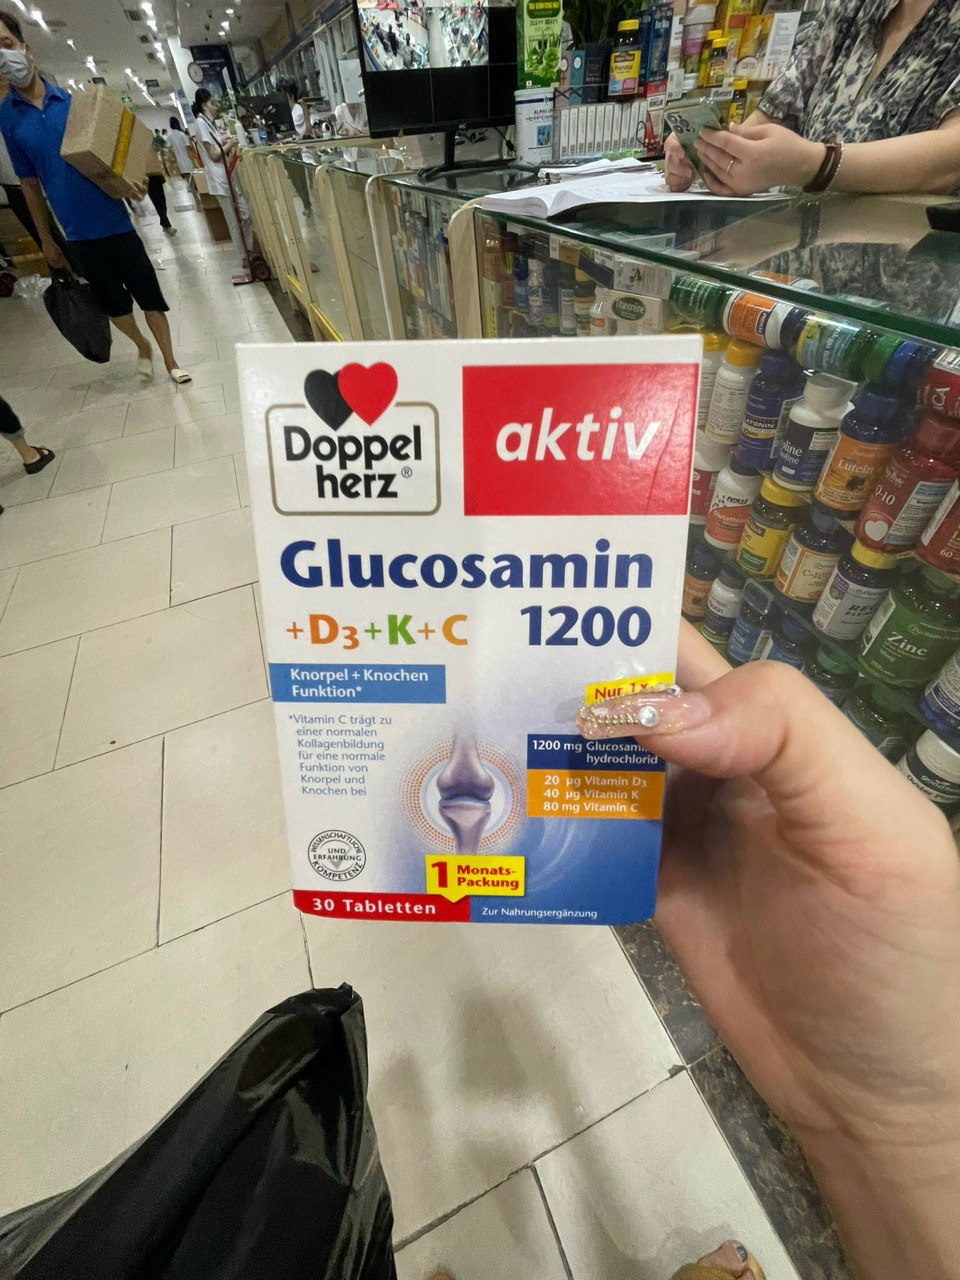 Doppel herz Glucosamin 1200